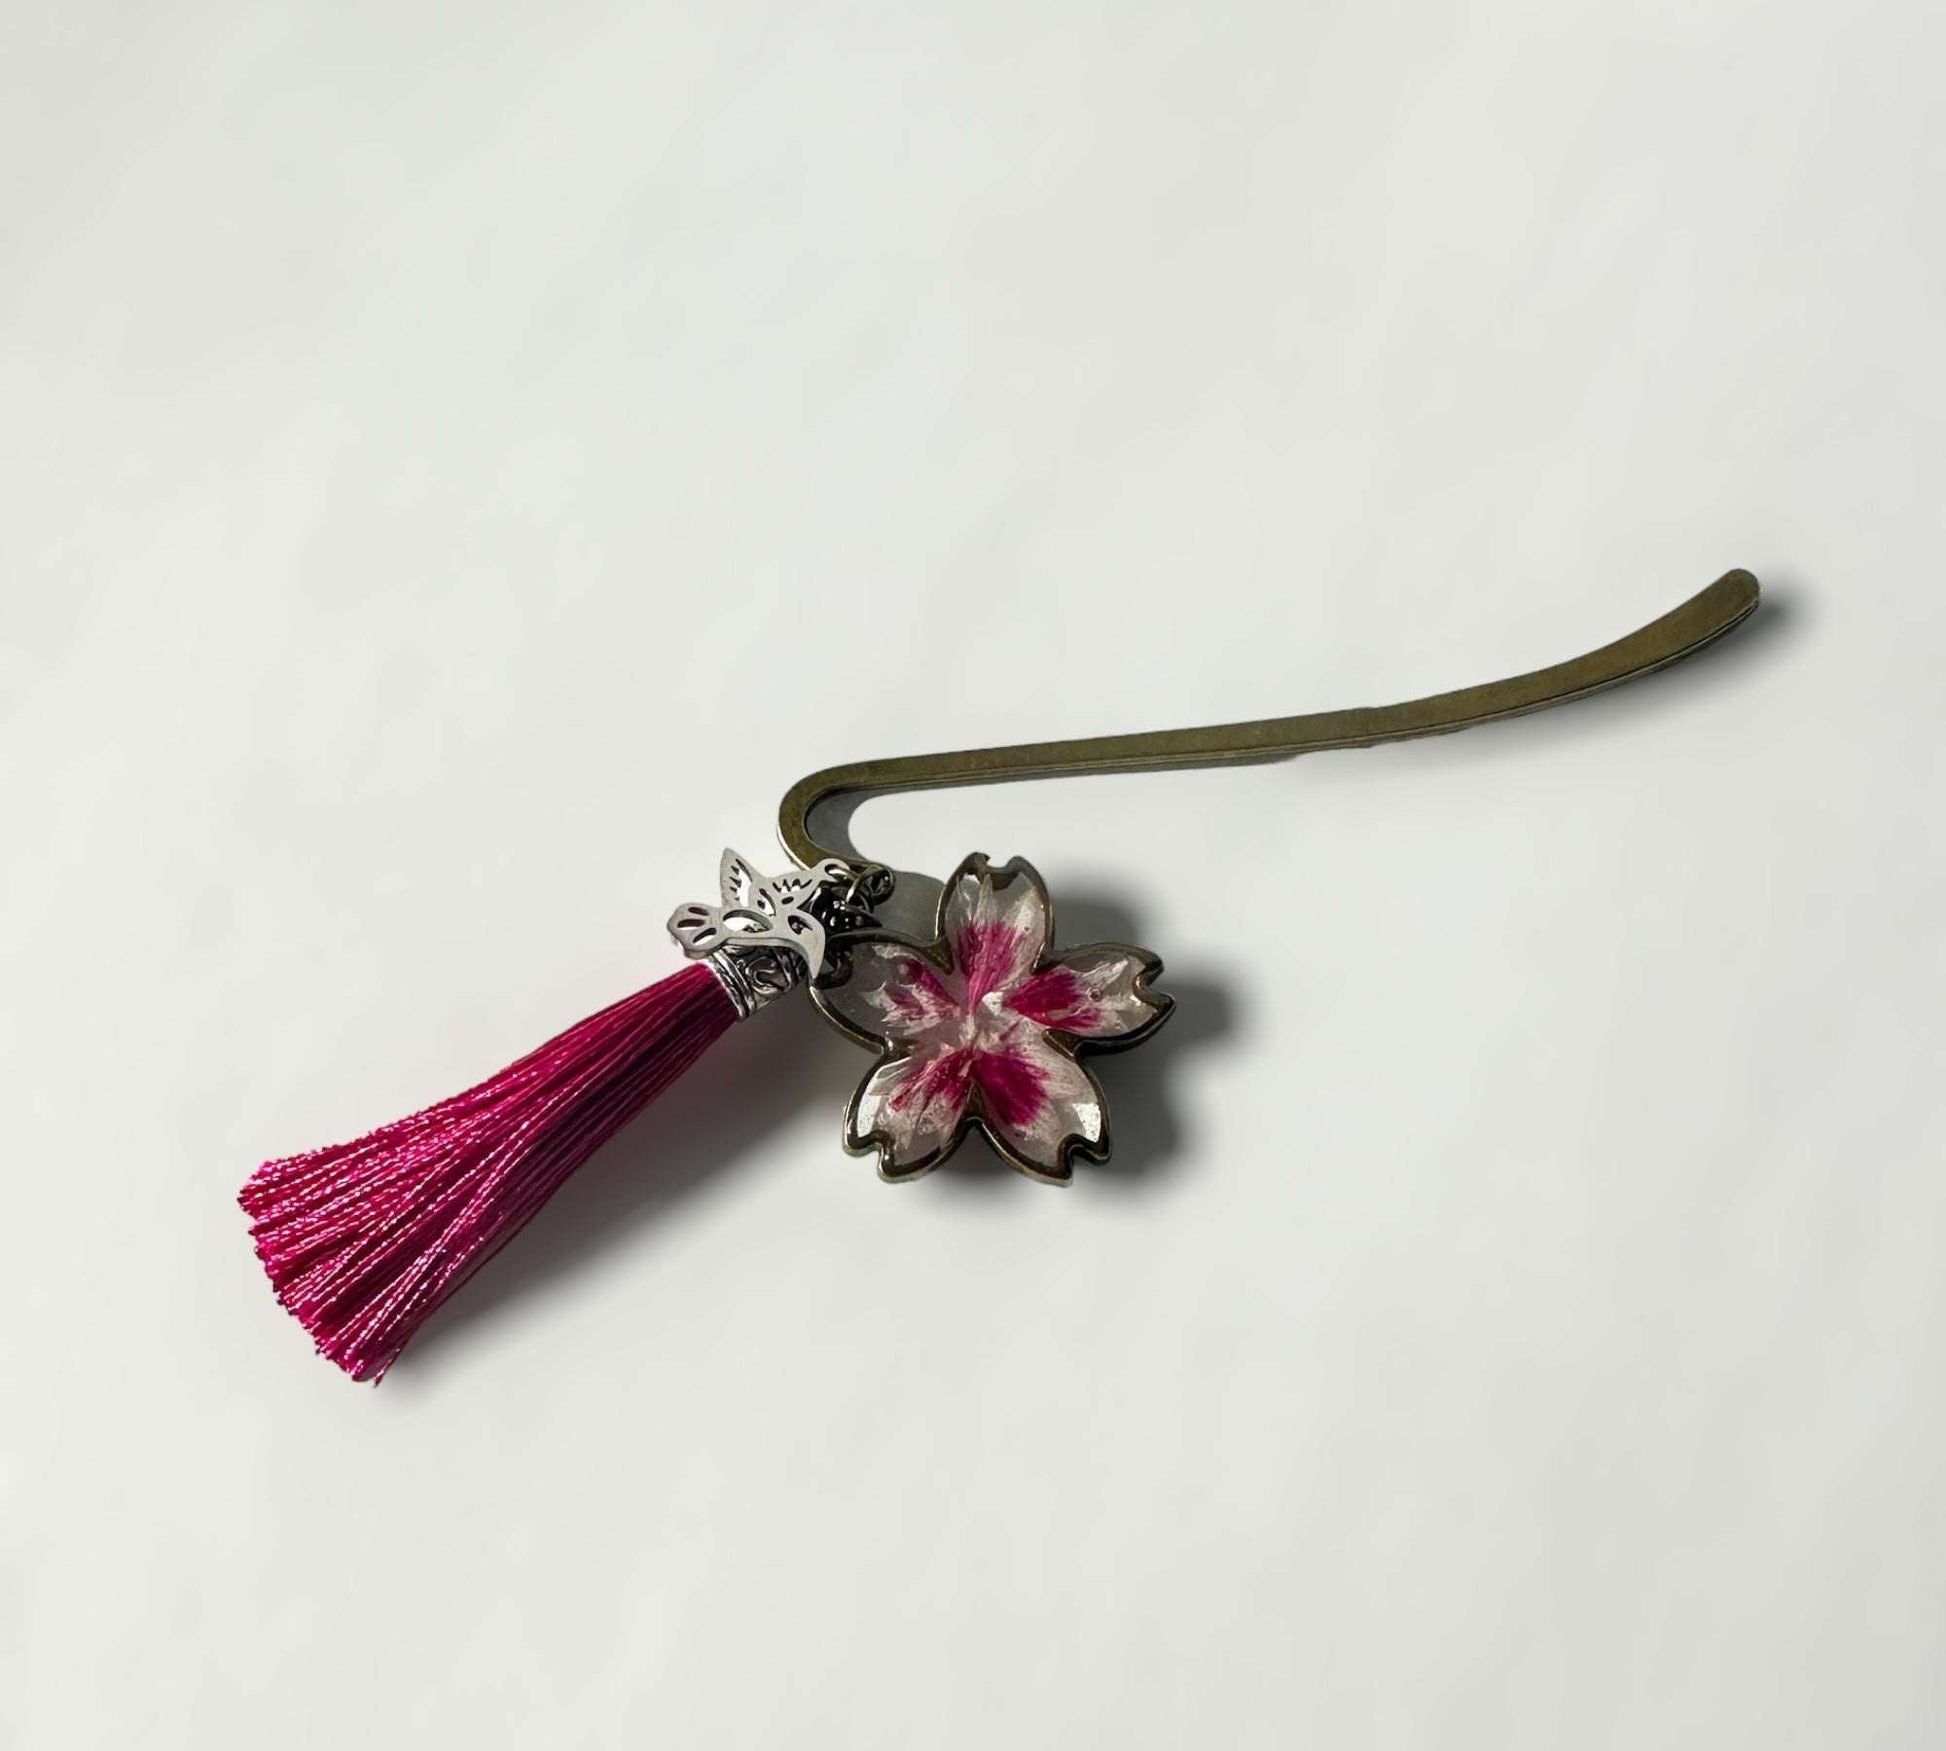 Bookmark - Flower Petal Bookmark with Hummingbird Charms